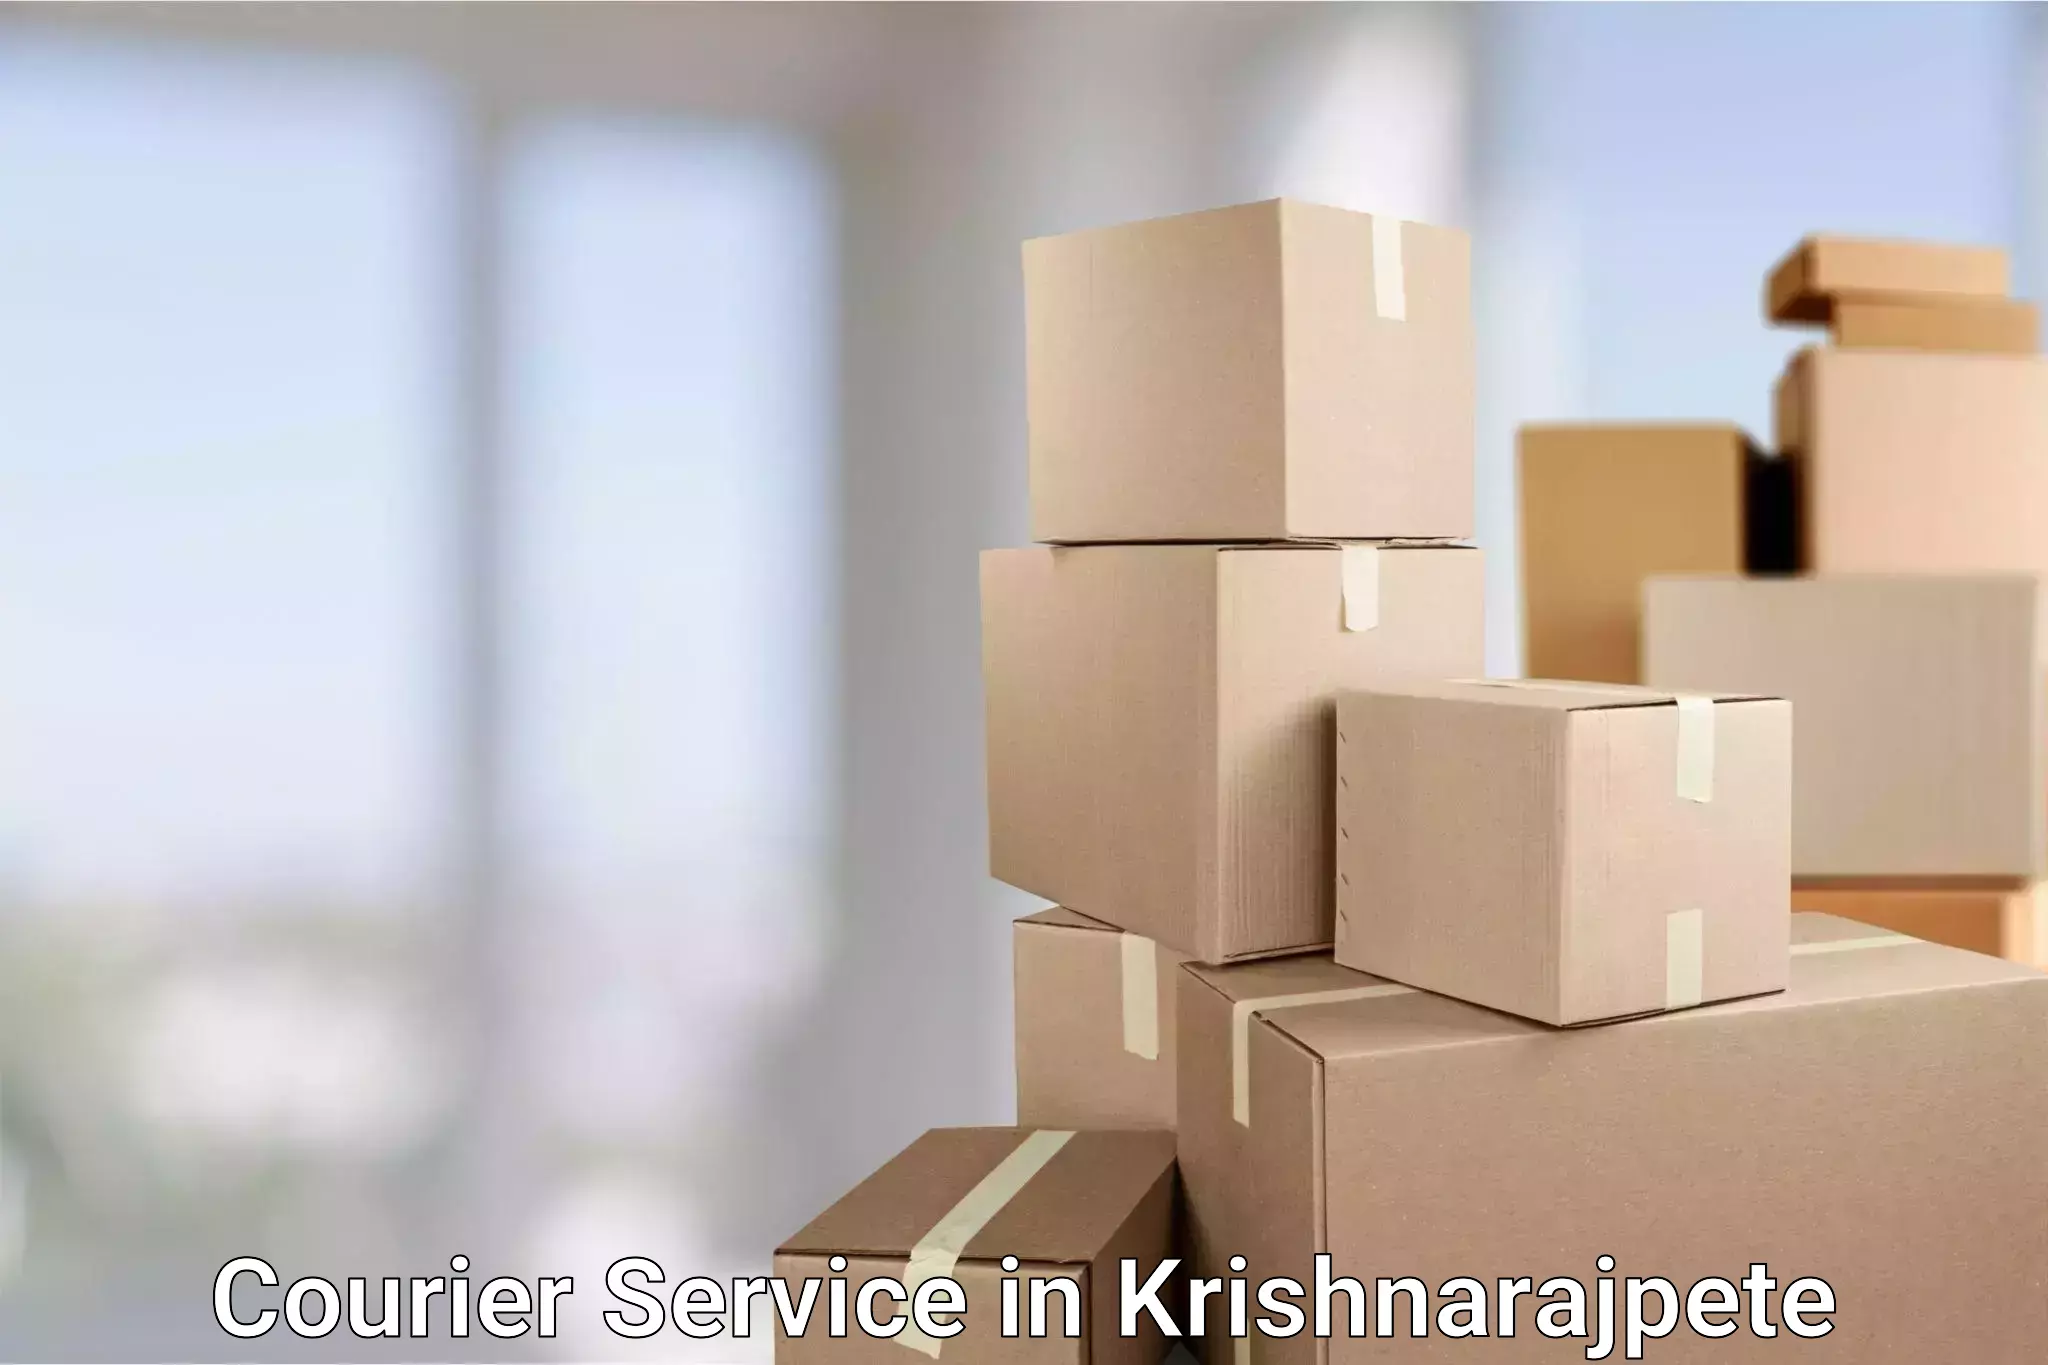 Personal parcel delivery in Krishnarajpete